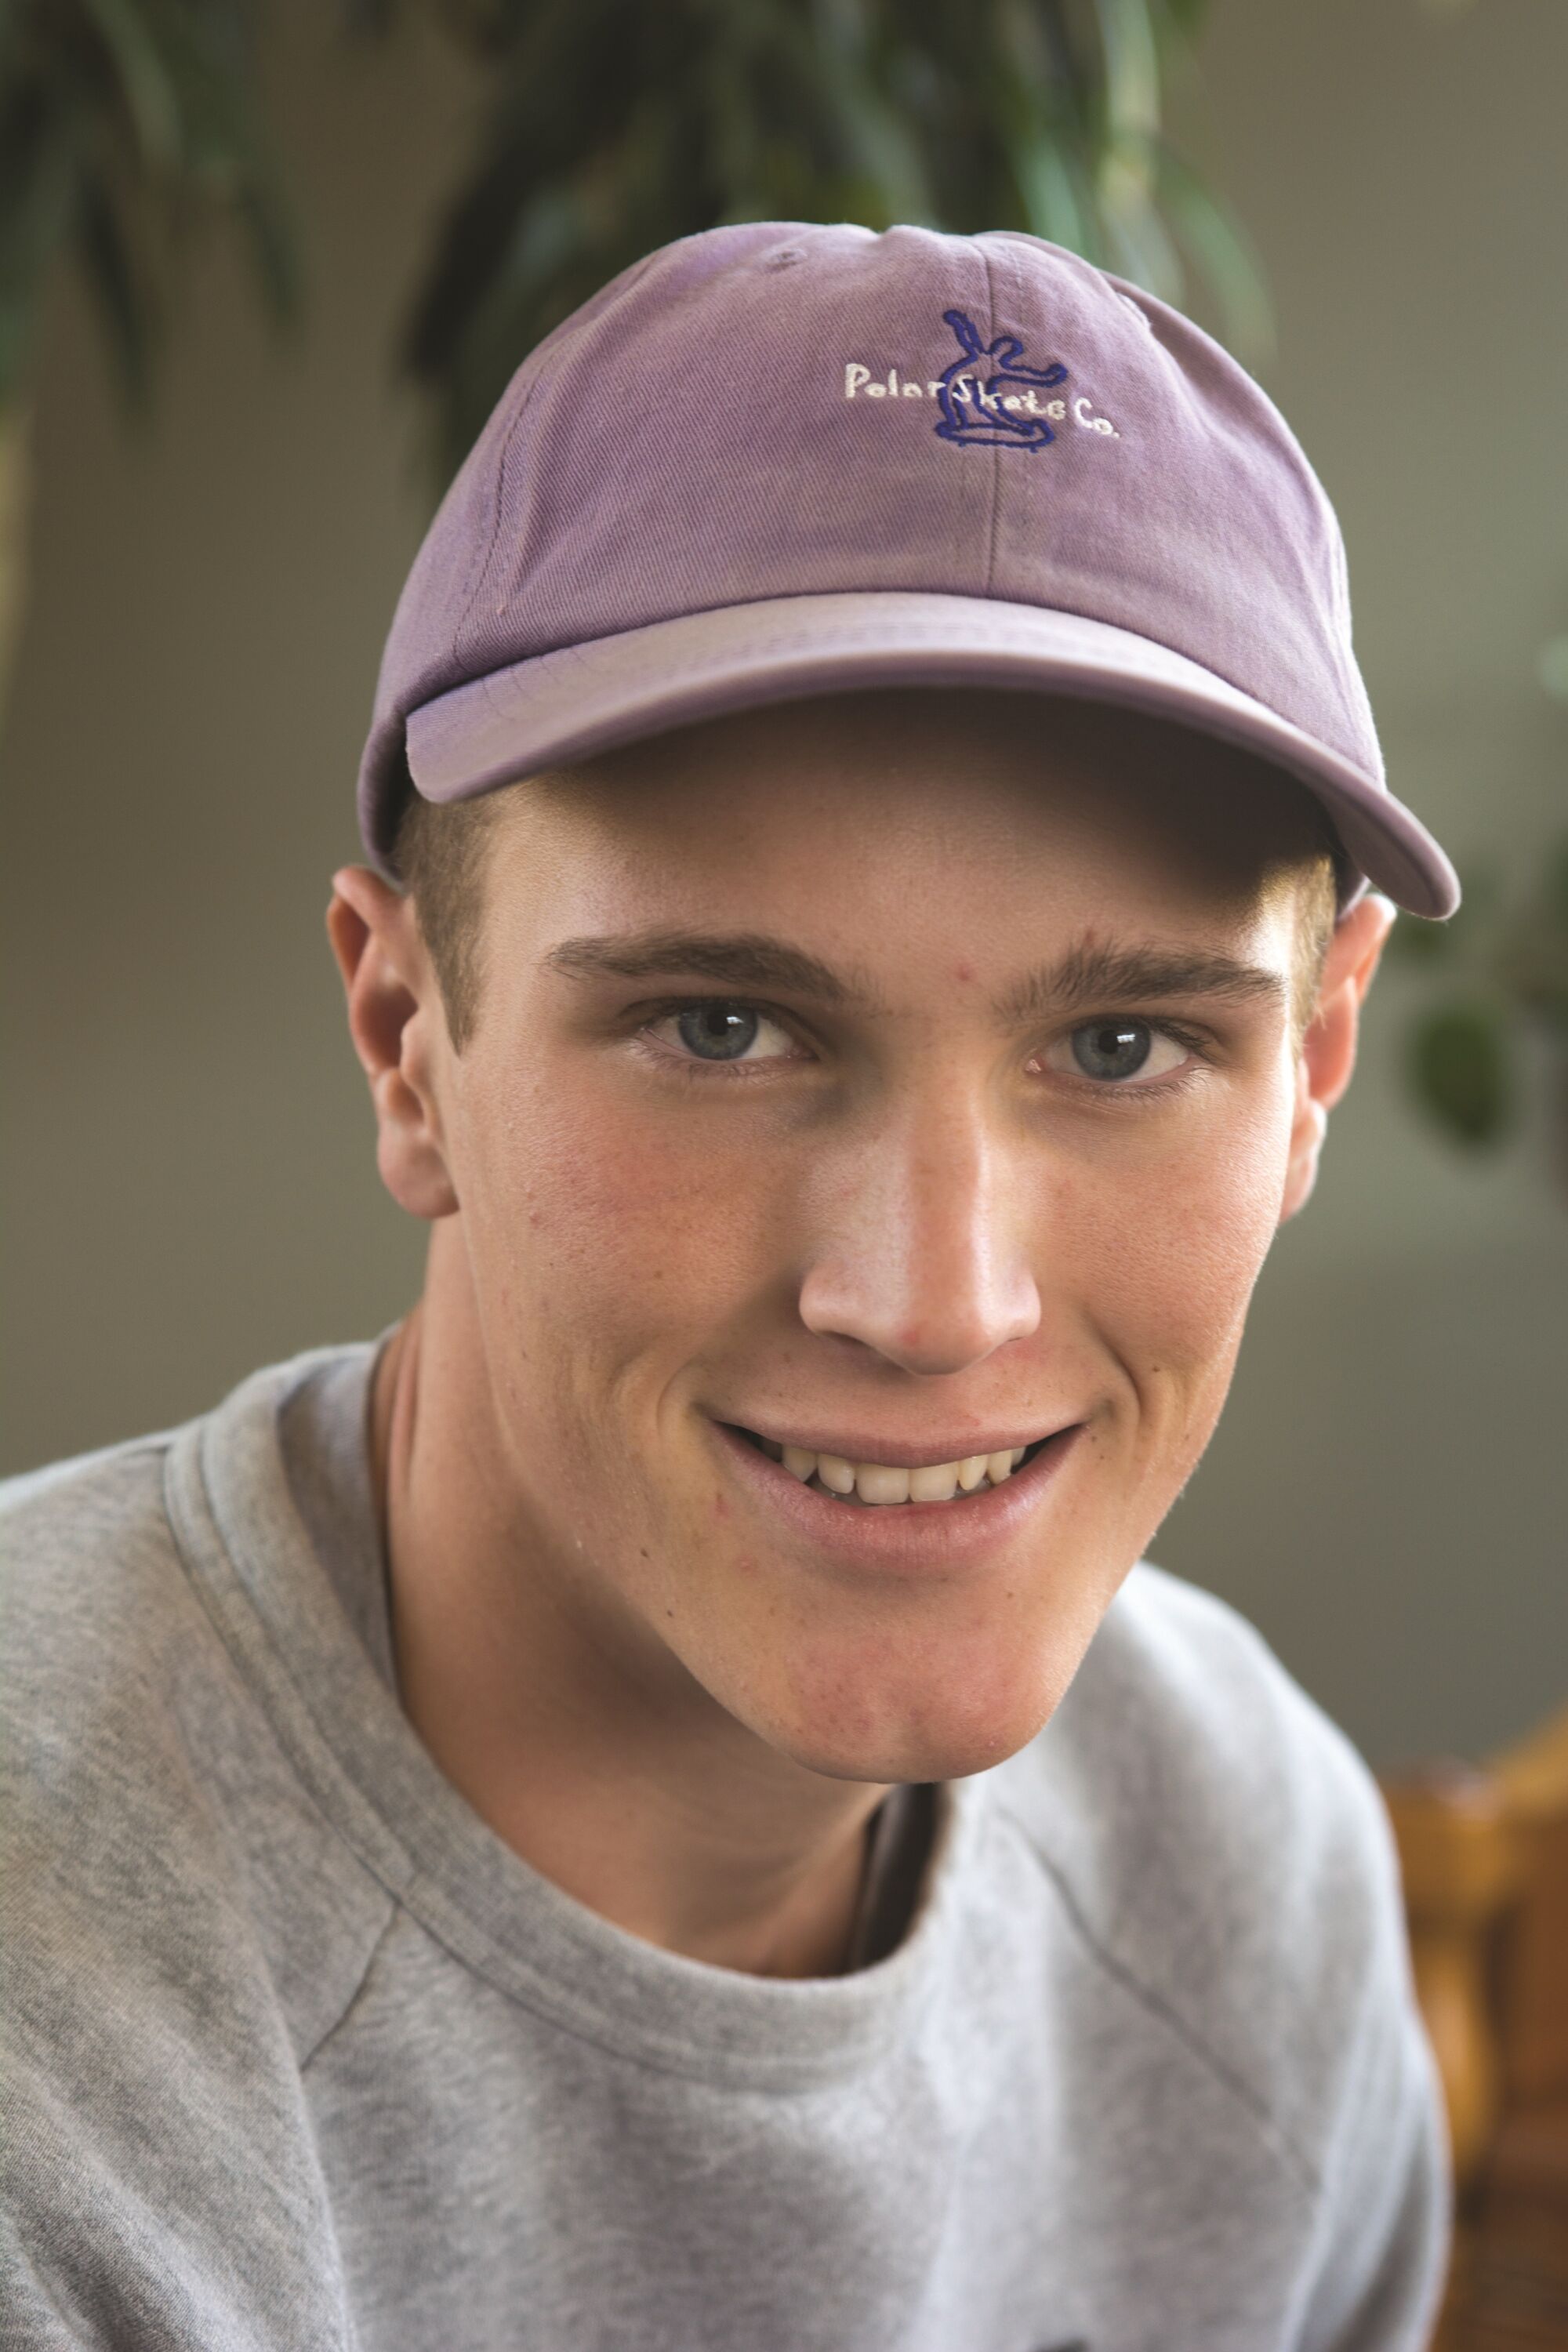 A teenage boy smiling